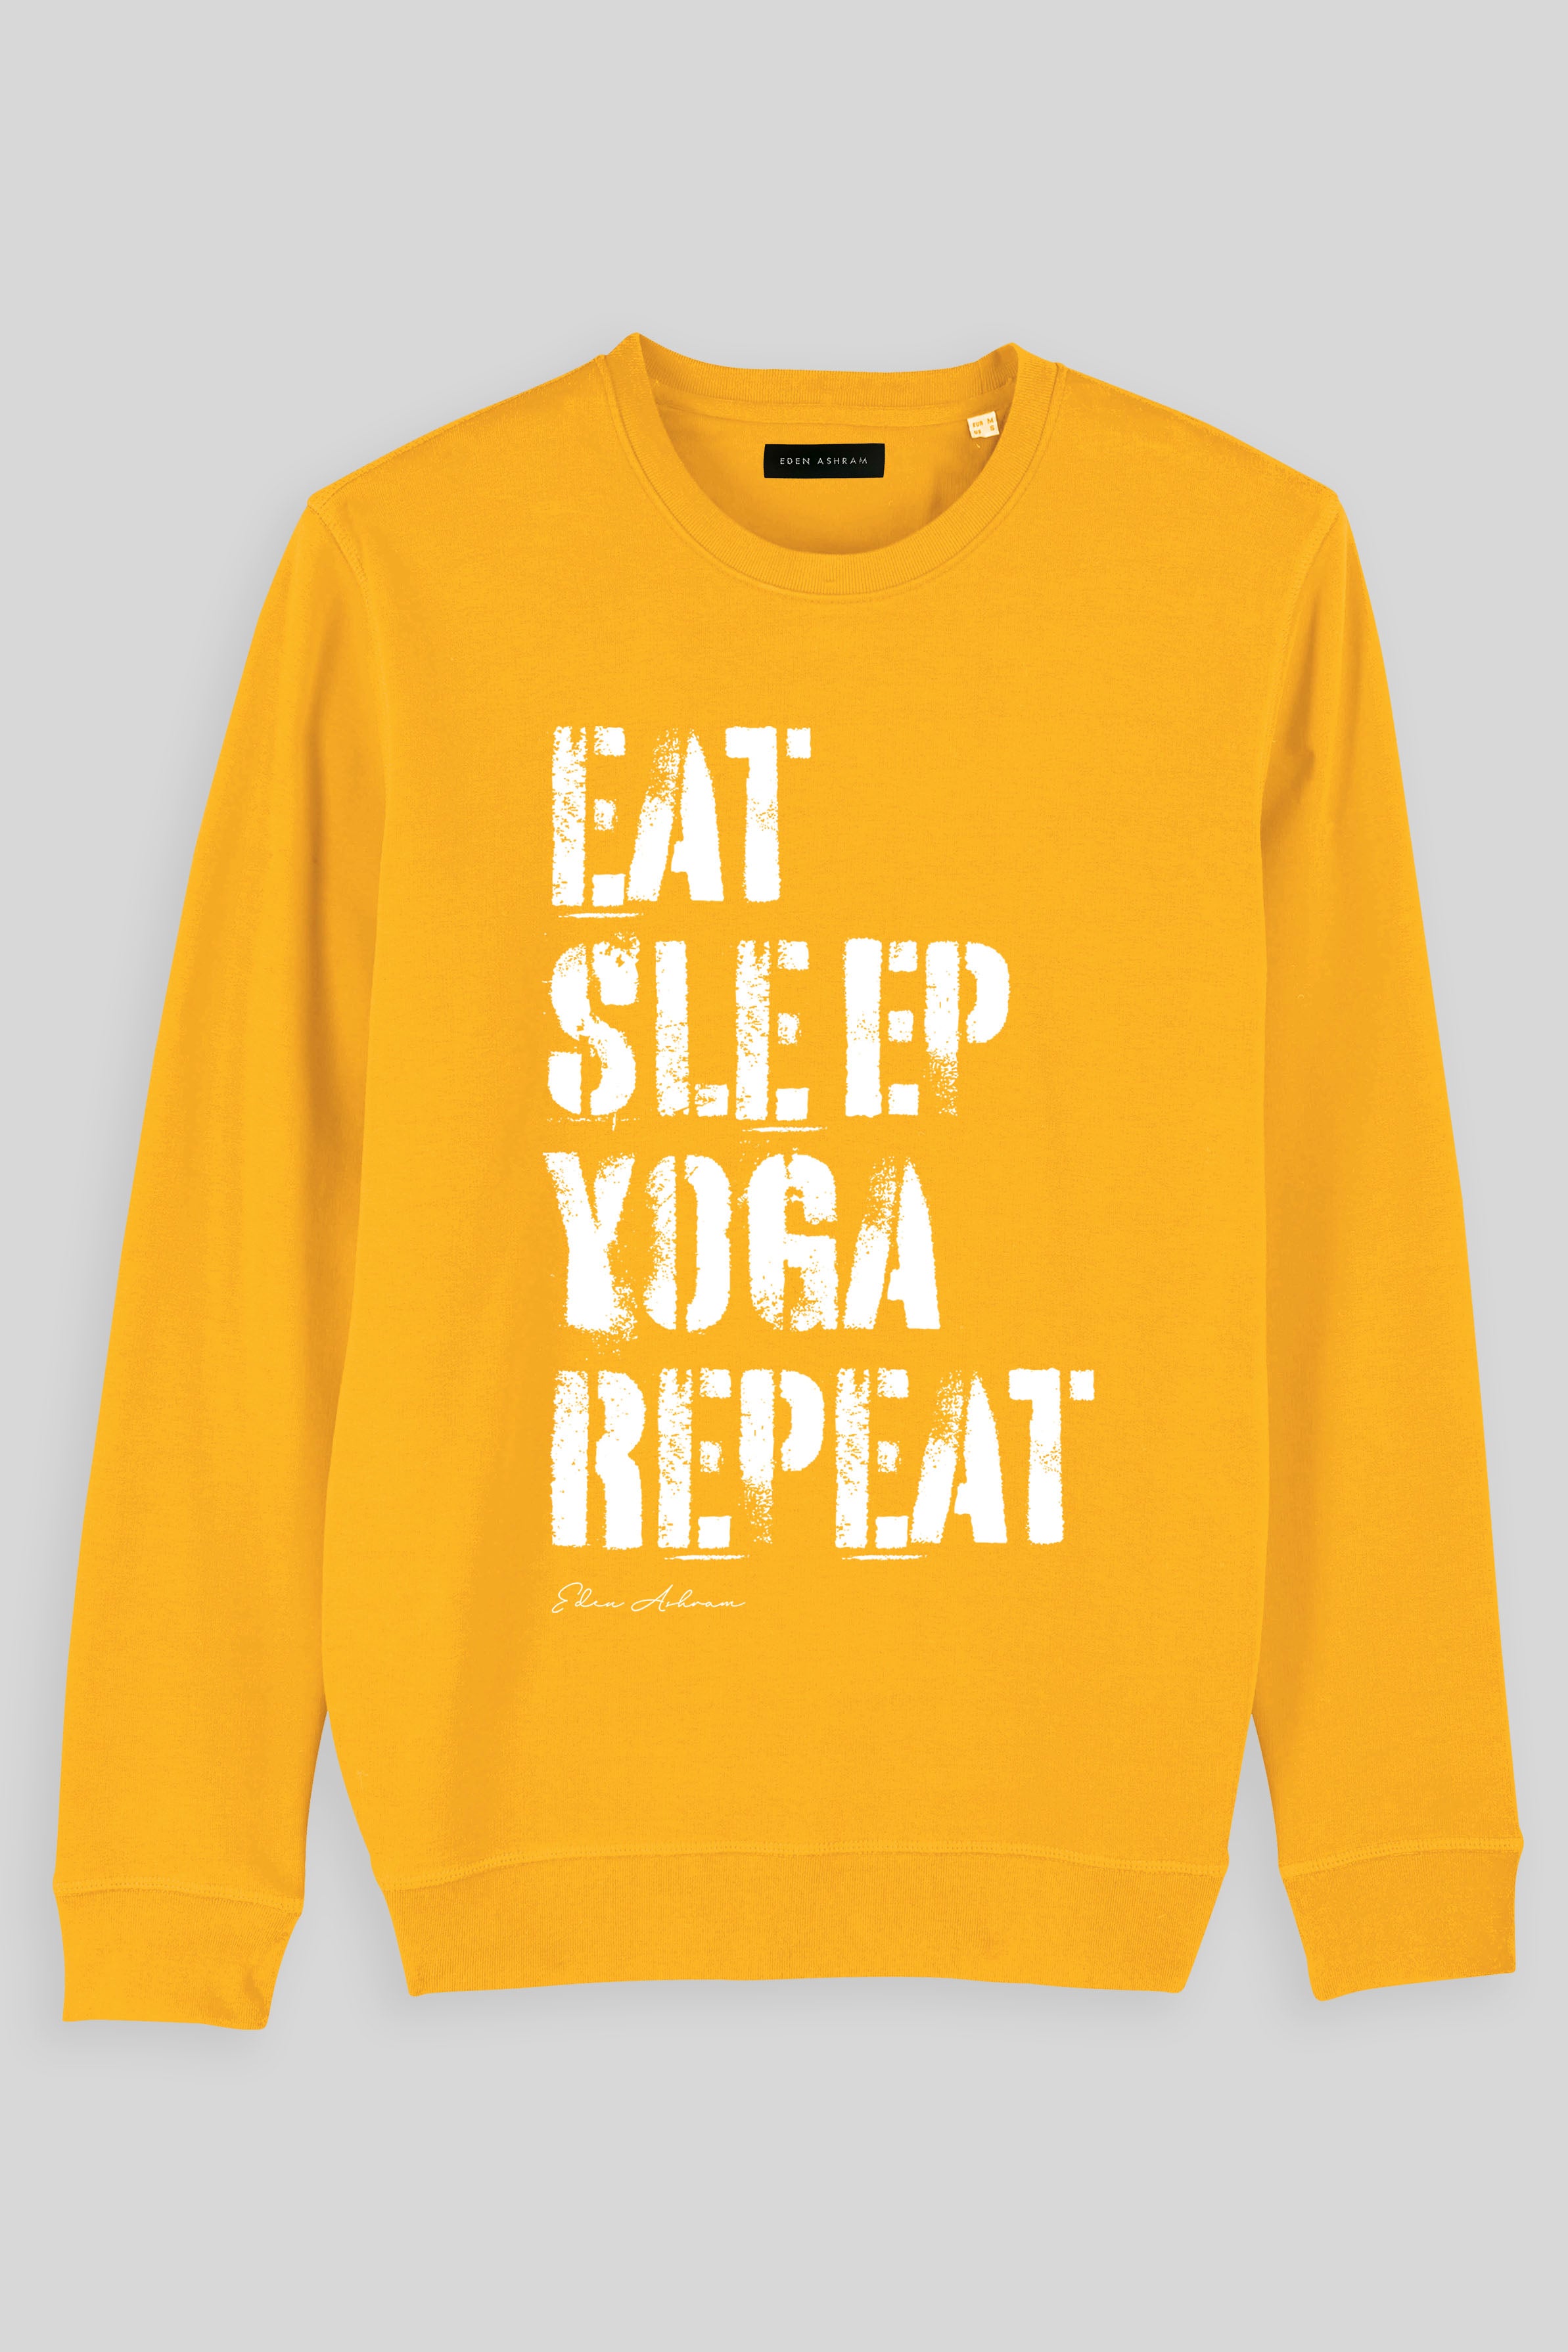 Eden Ashram Eat, Sleep, Yoga Repeat Premium Crew Neck Sweatshirt Spectra Yellow